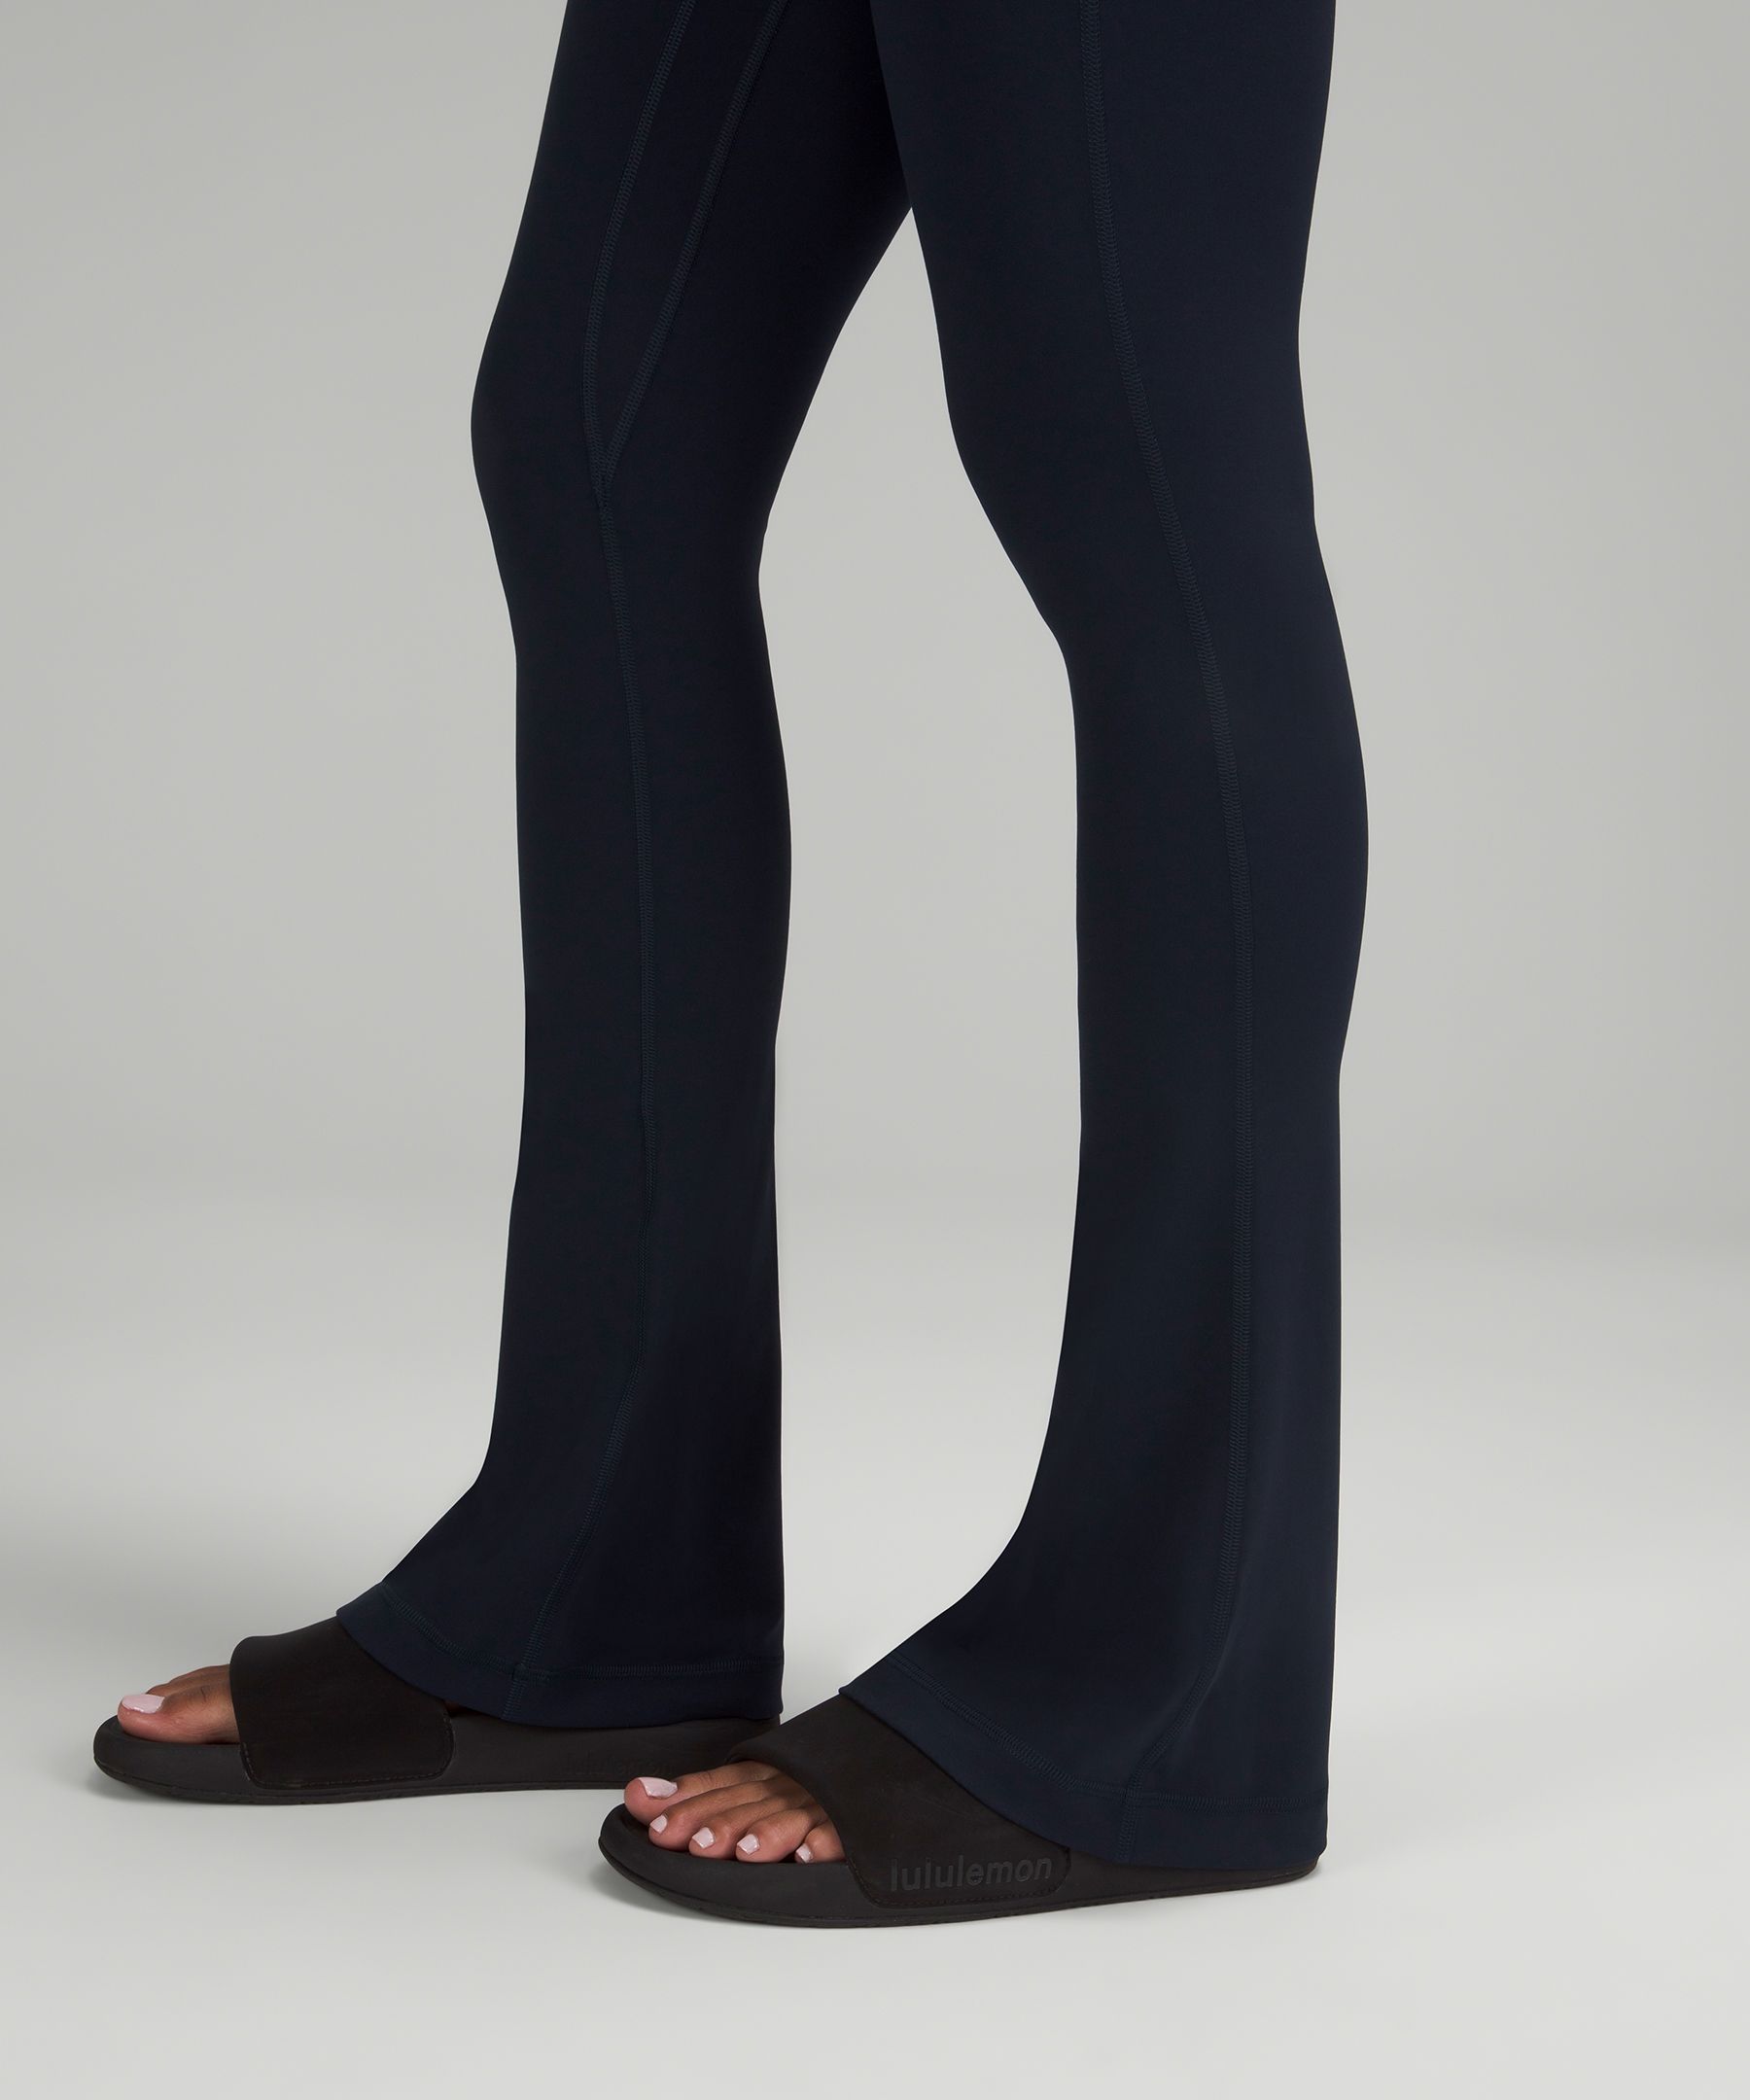 Lululemon Align High Rise Mini Flare Pant 32 - Retail $118